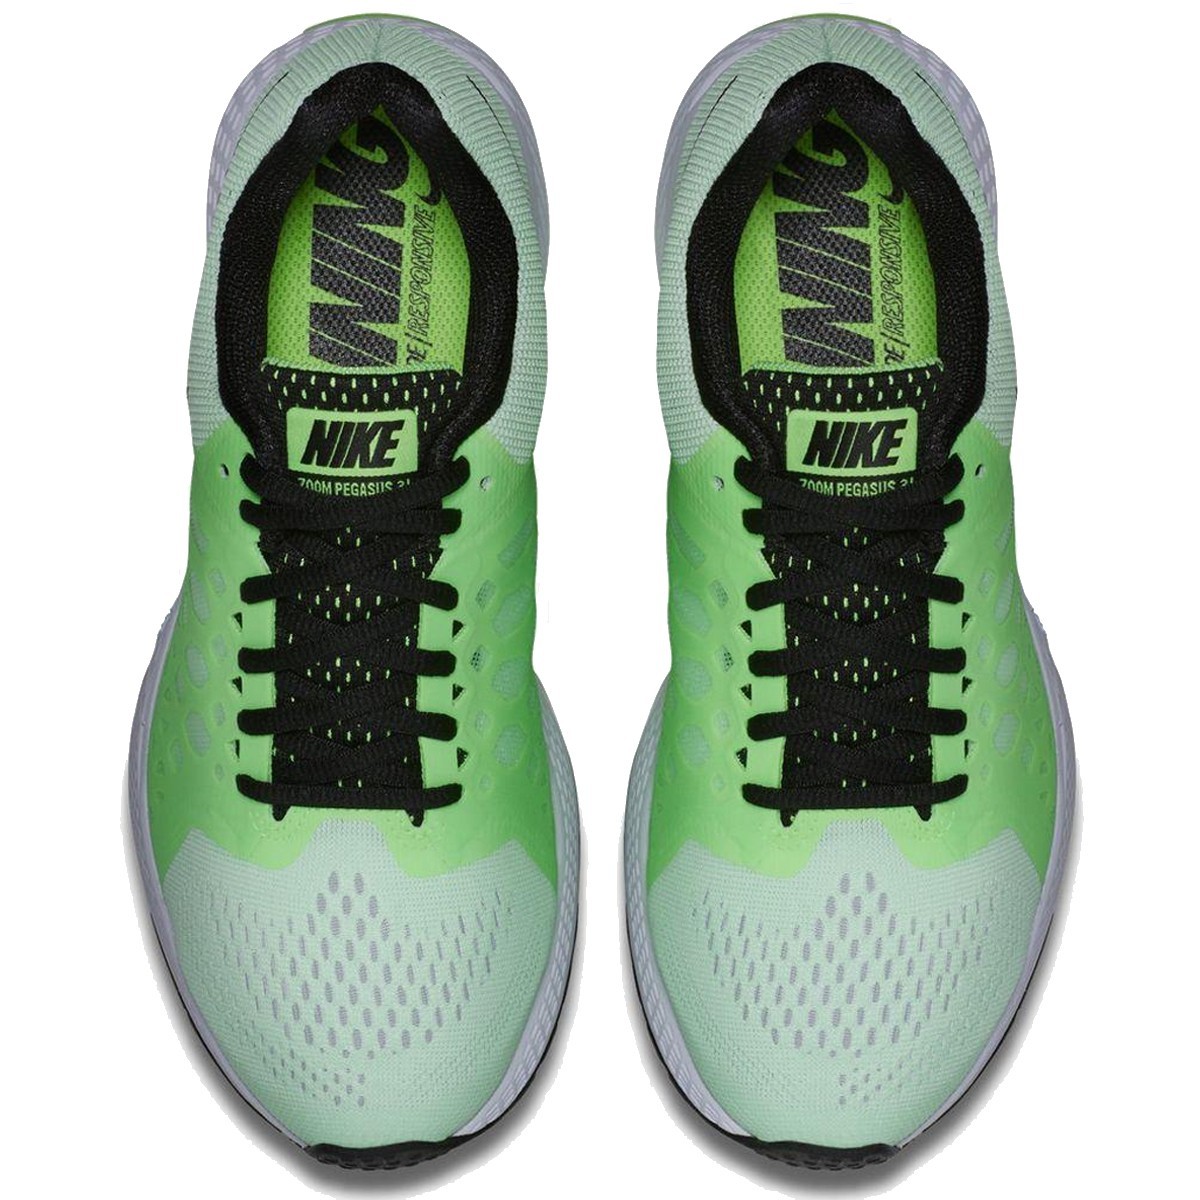 Nike WMNS NIKE AIR ZOOM PEGASUS 31 